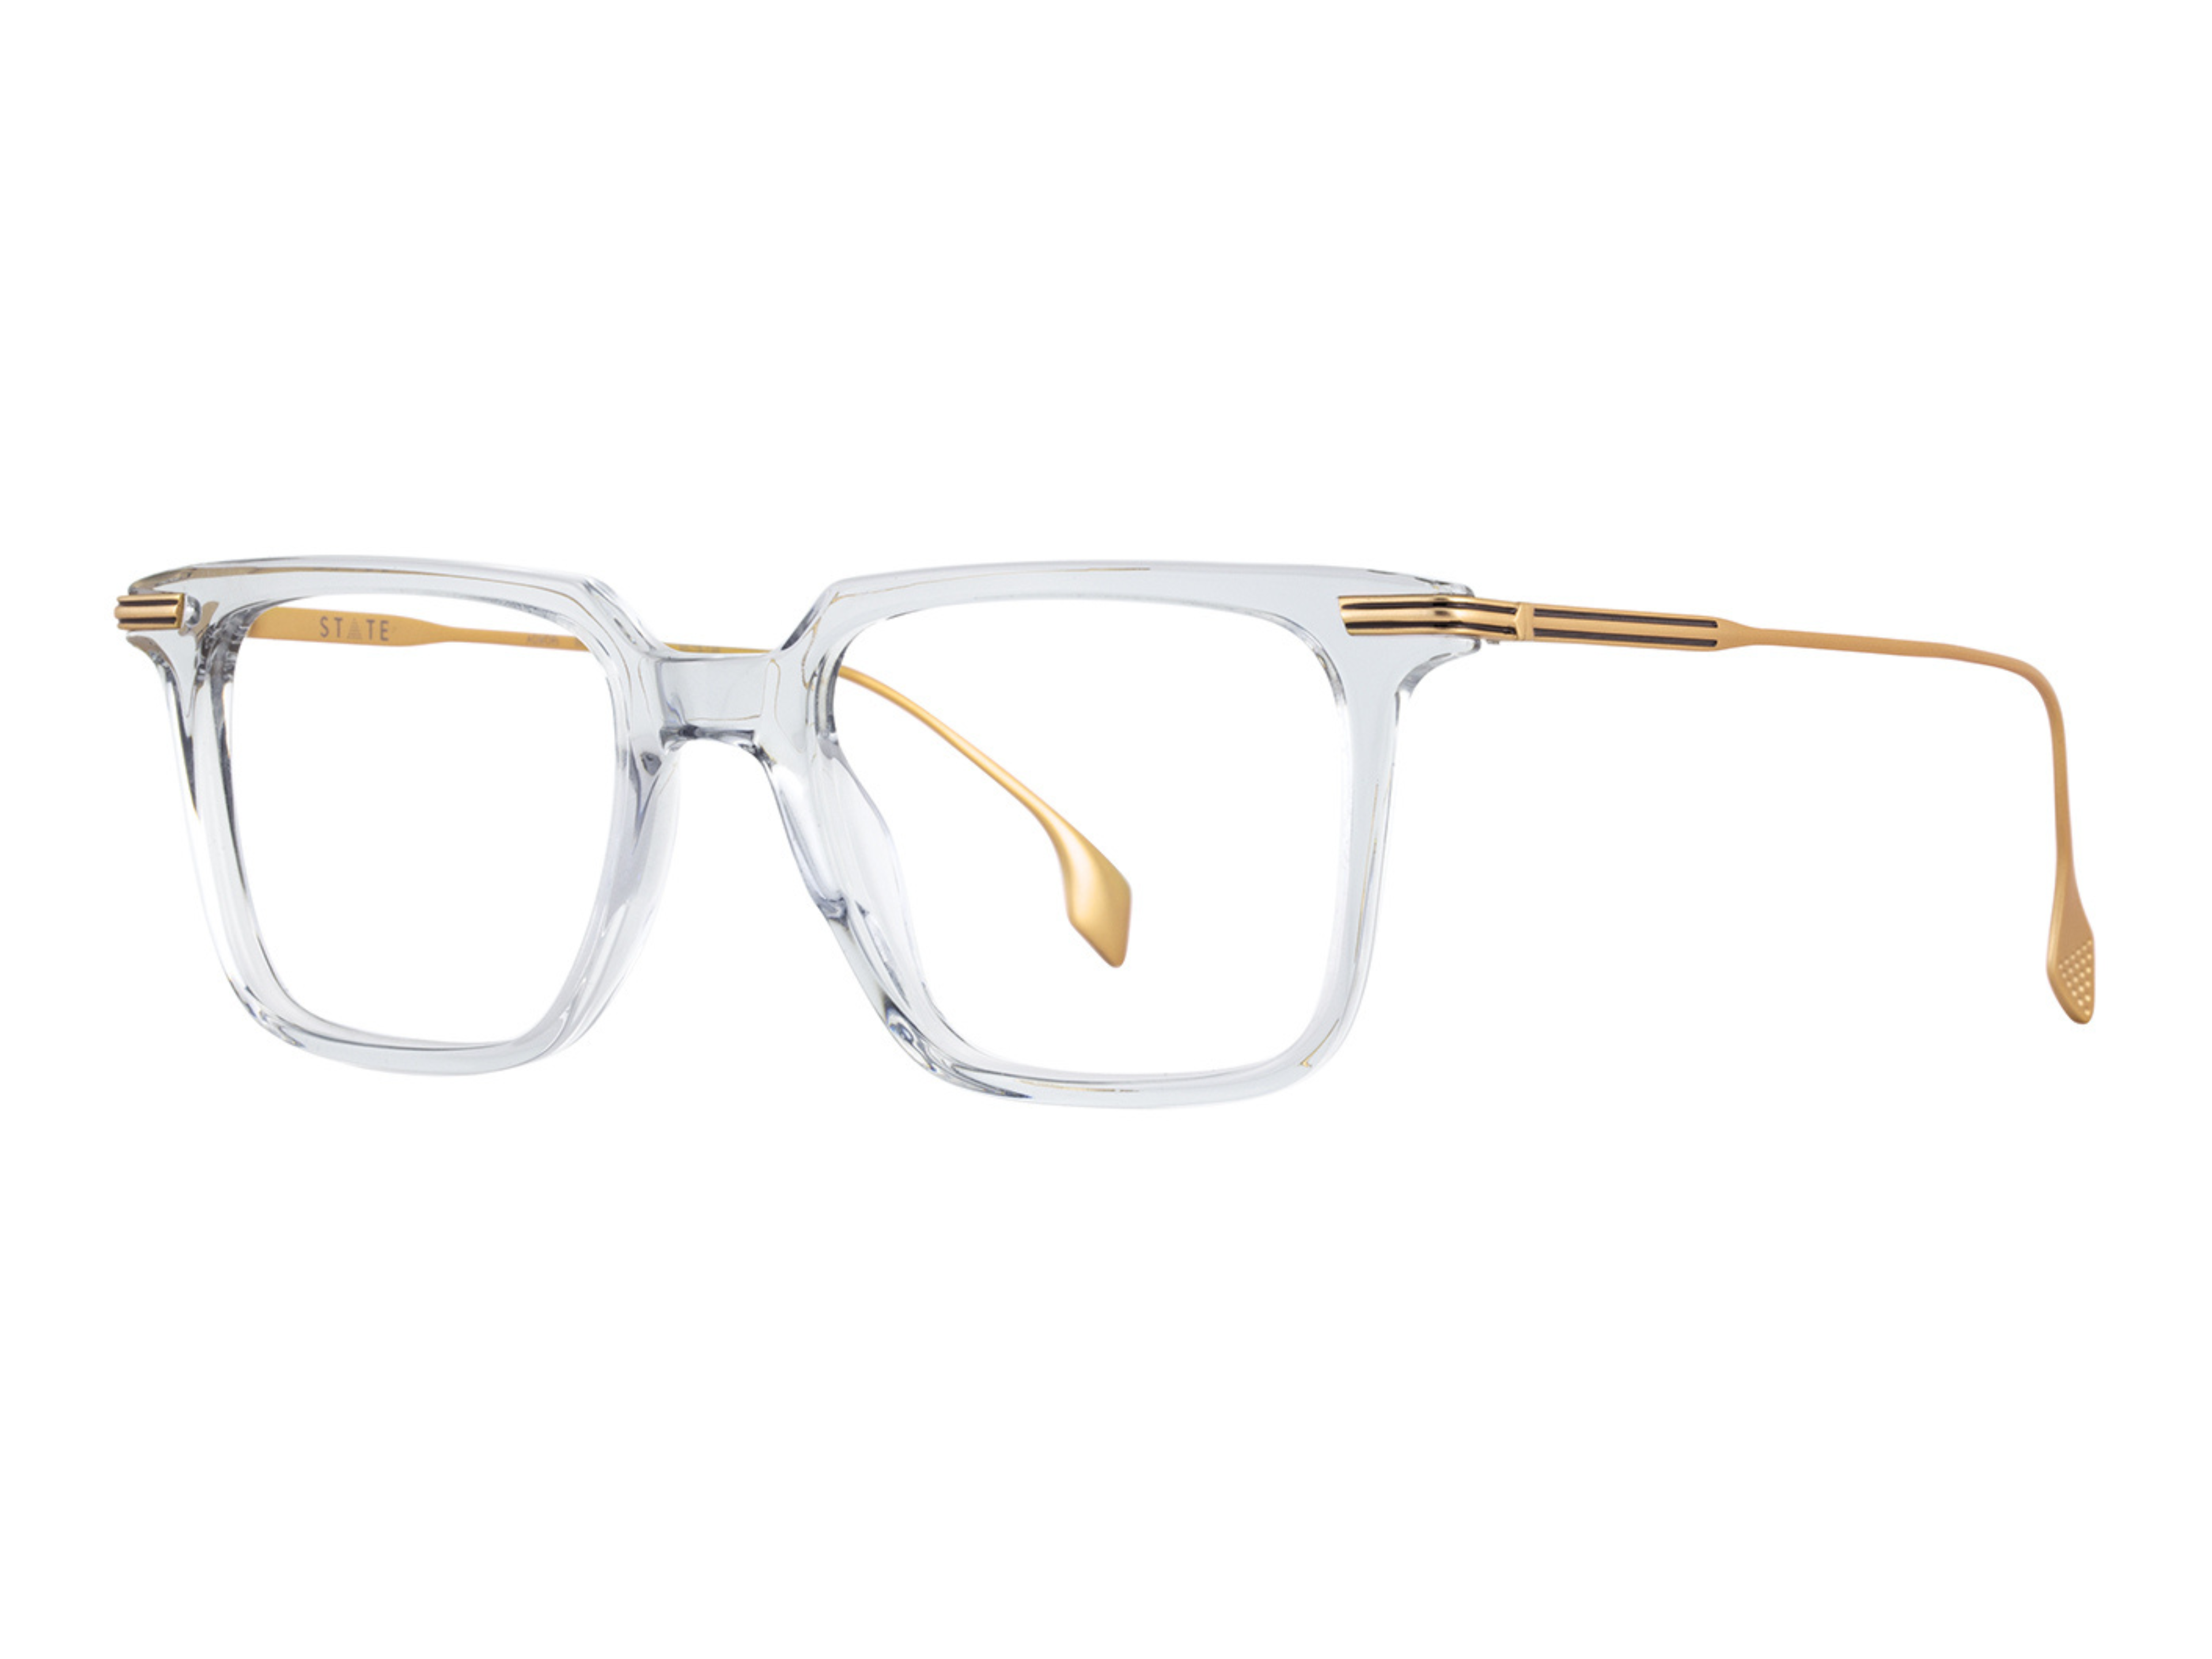 International_craftsmanship_Aomori_eyeglass_frames